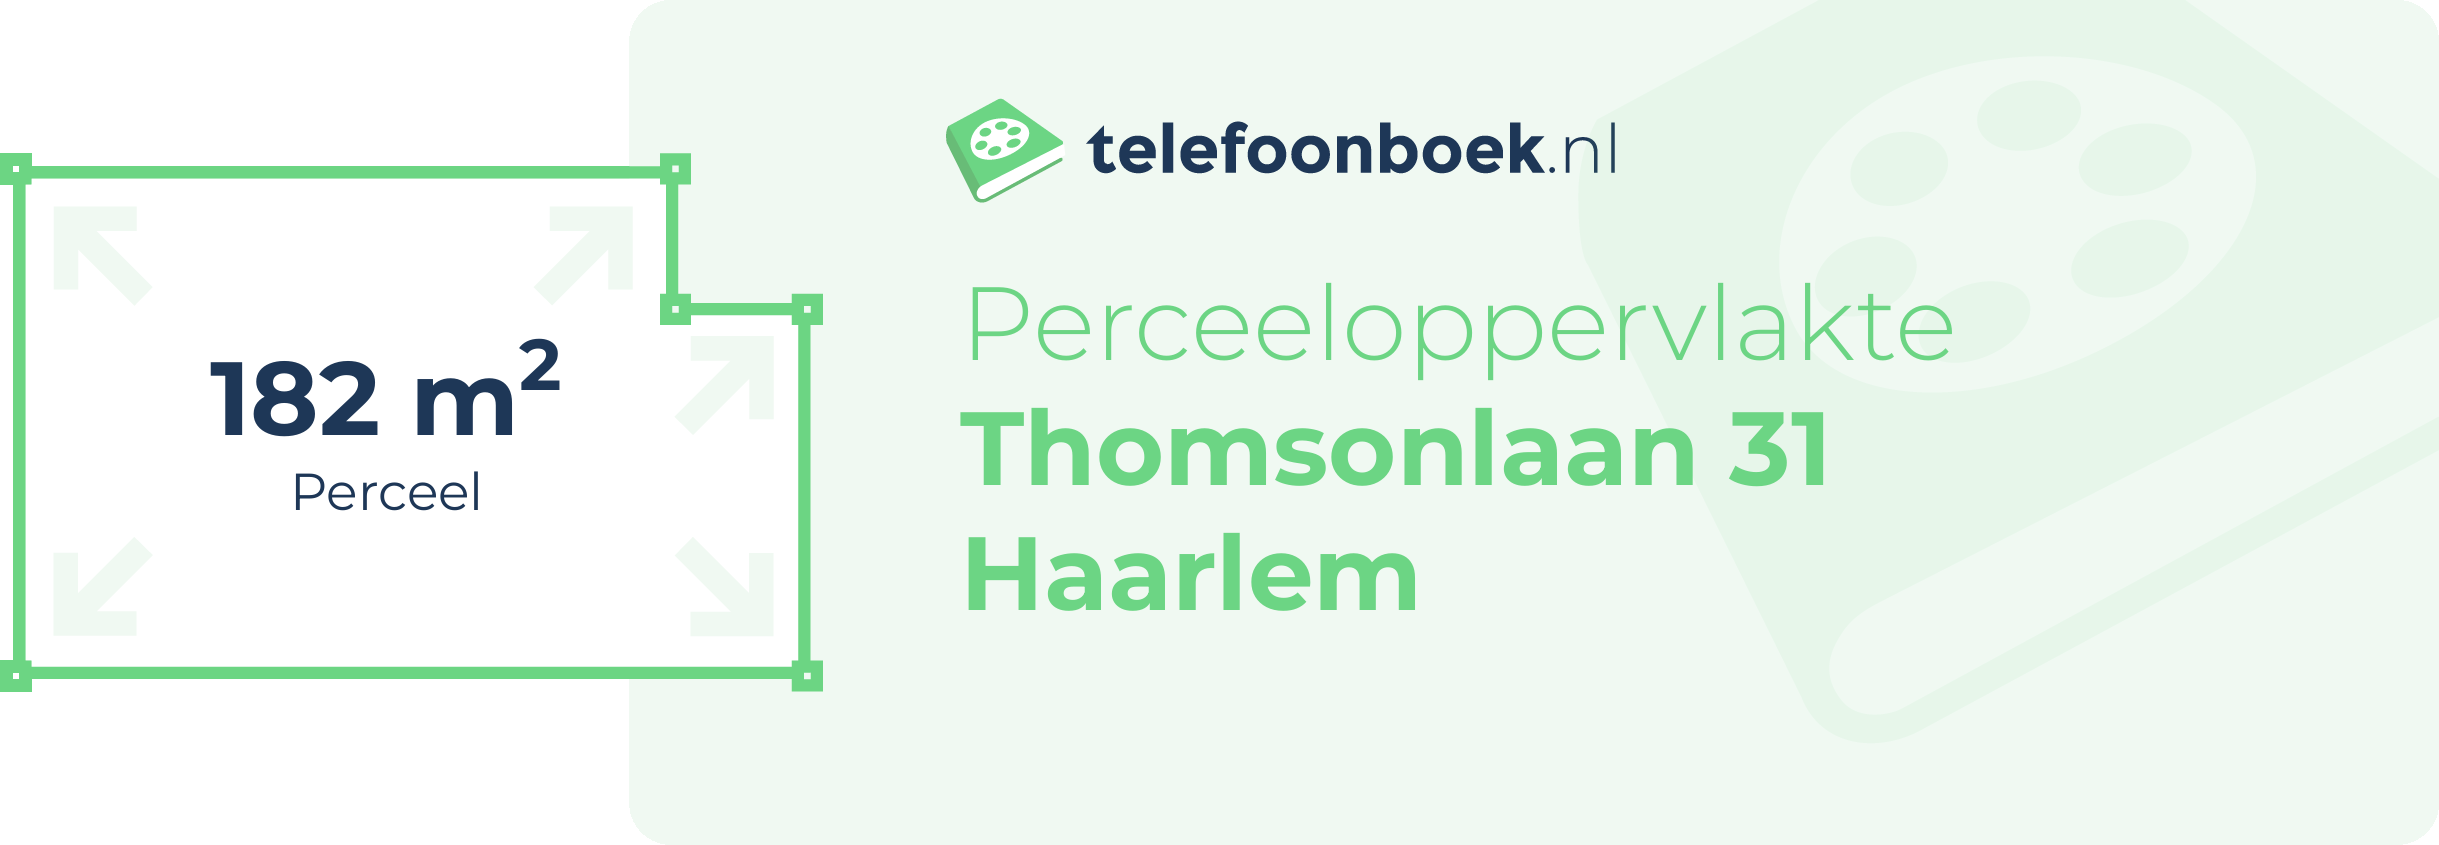 Perceeloppervlakte Thomsonlaan 31 Haarlem